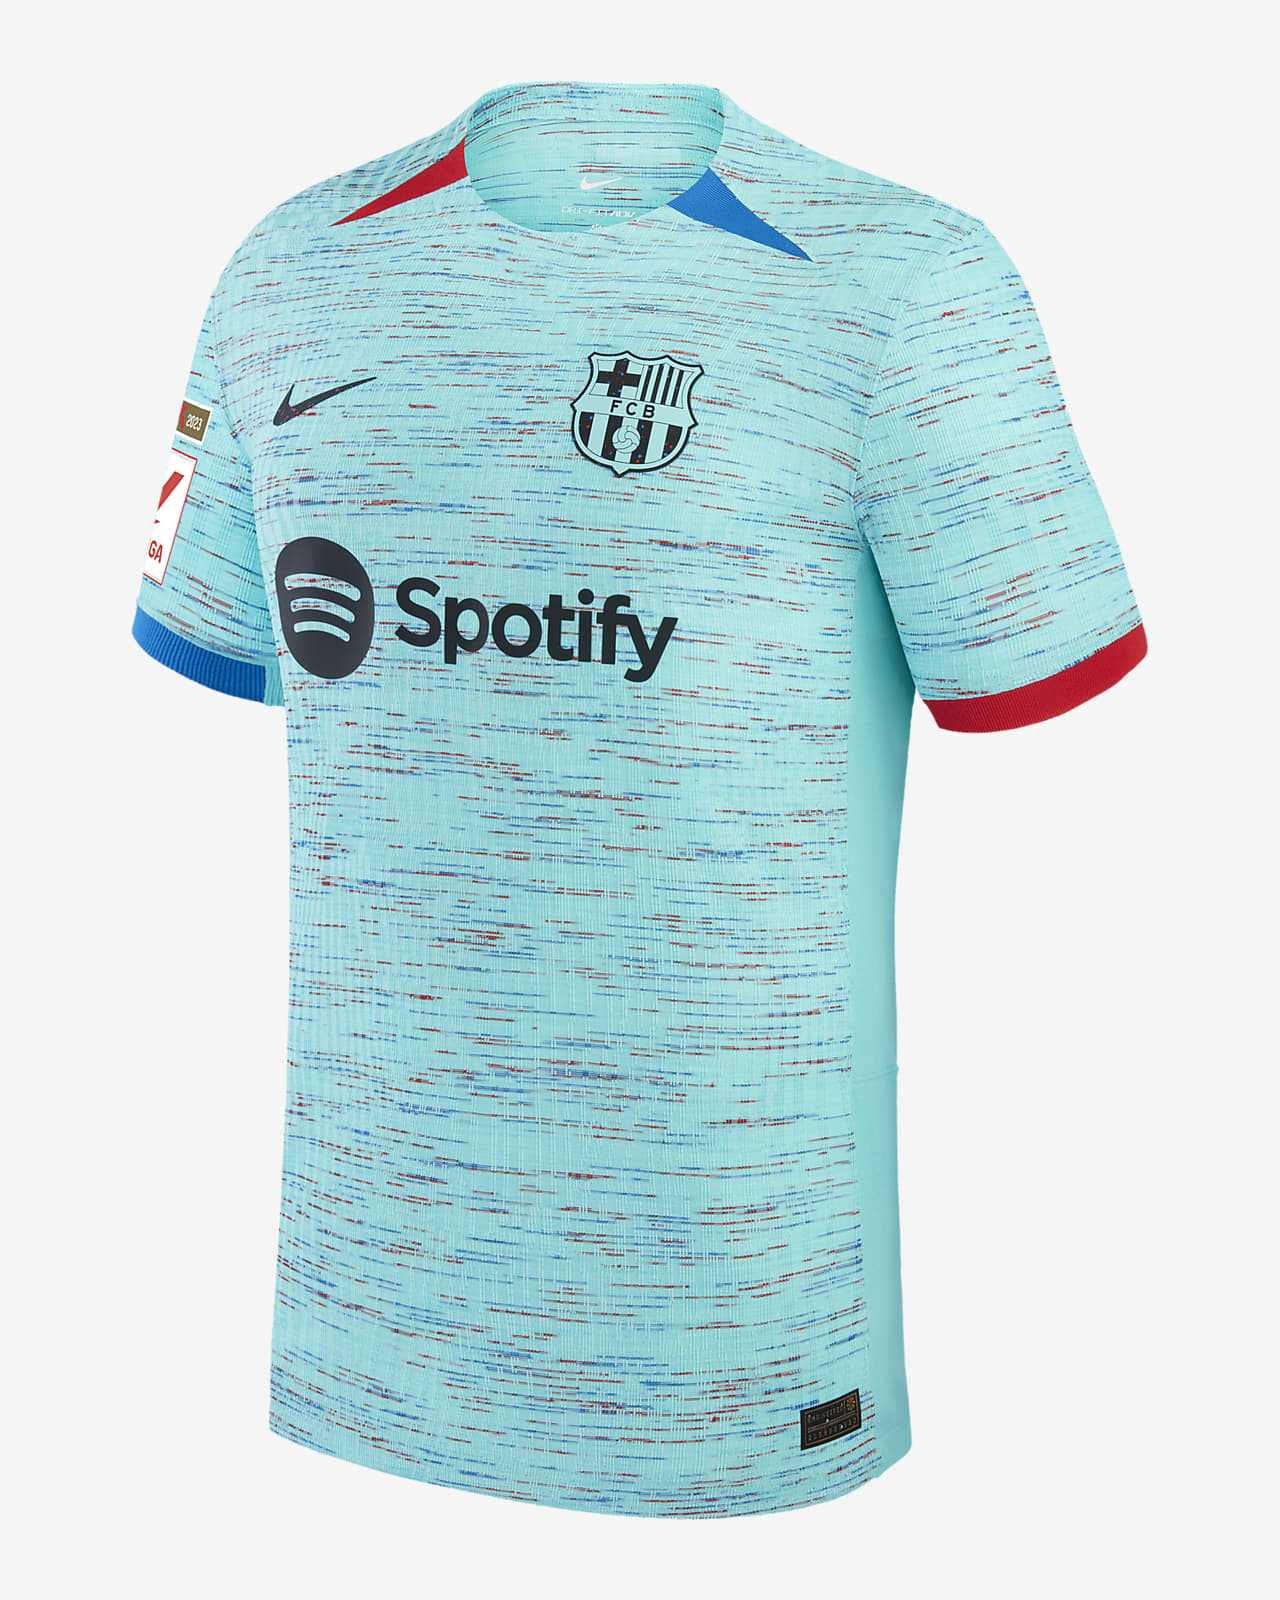 Camiseta Nike Barcelona Pedri 2023 2024 Dri-Fit ADV Match